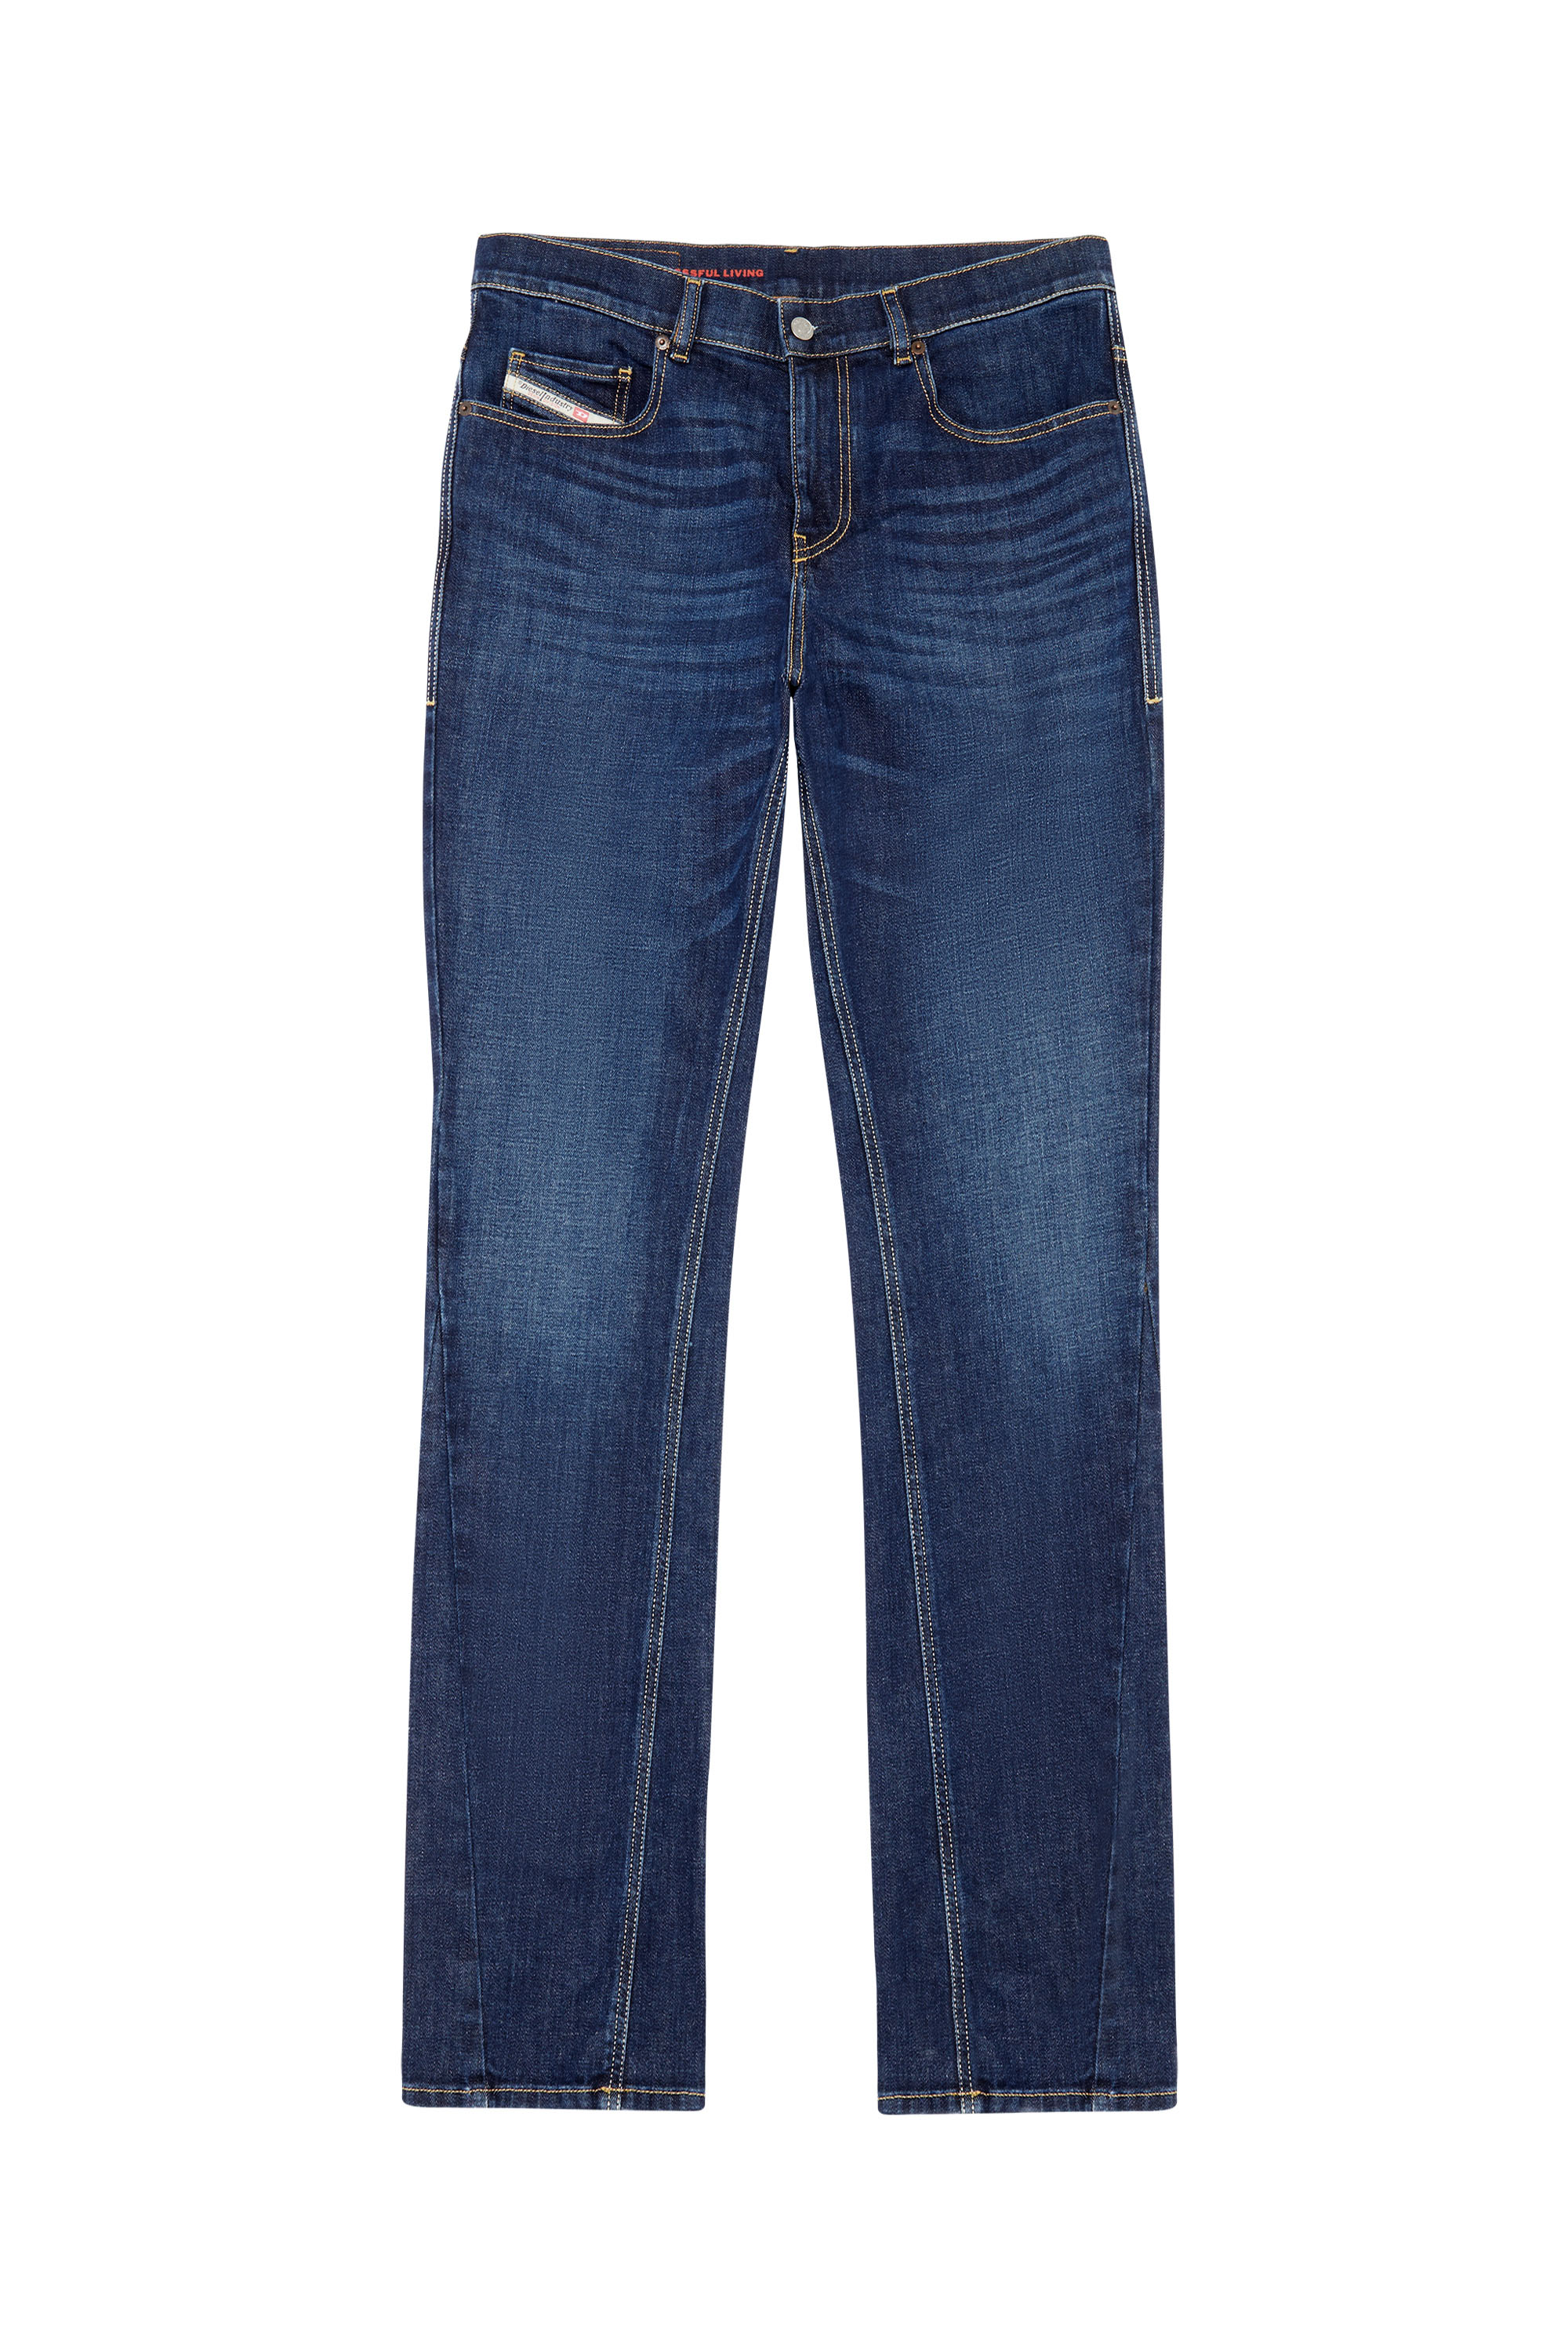 Bootcut Jeans 2021 D-Vocs 09B90, Dark Blue - Jeans